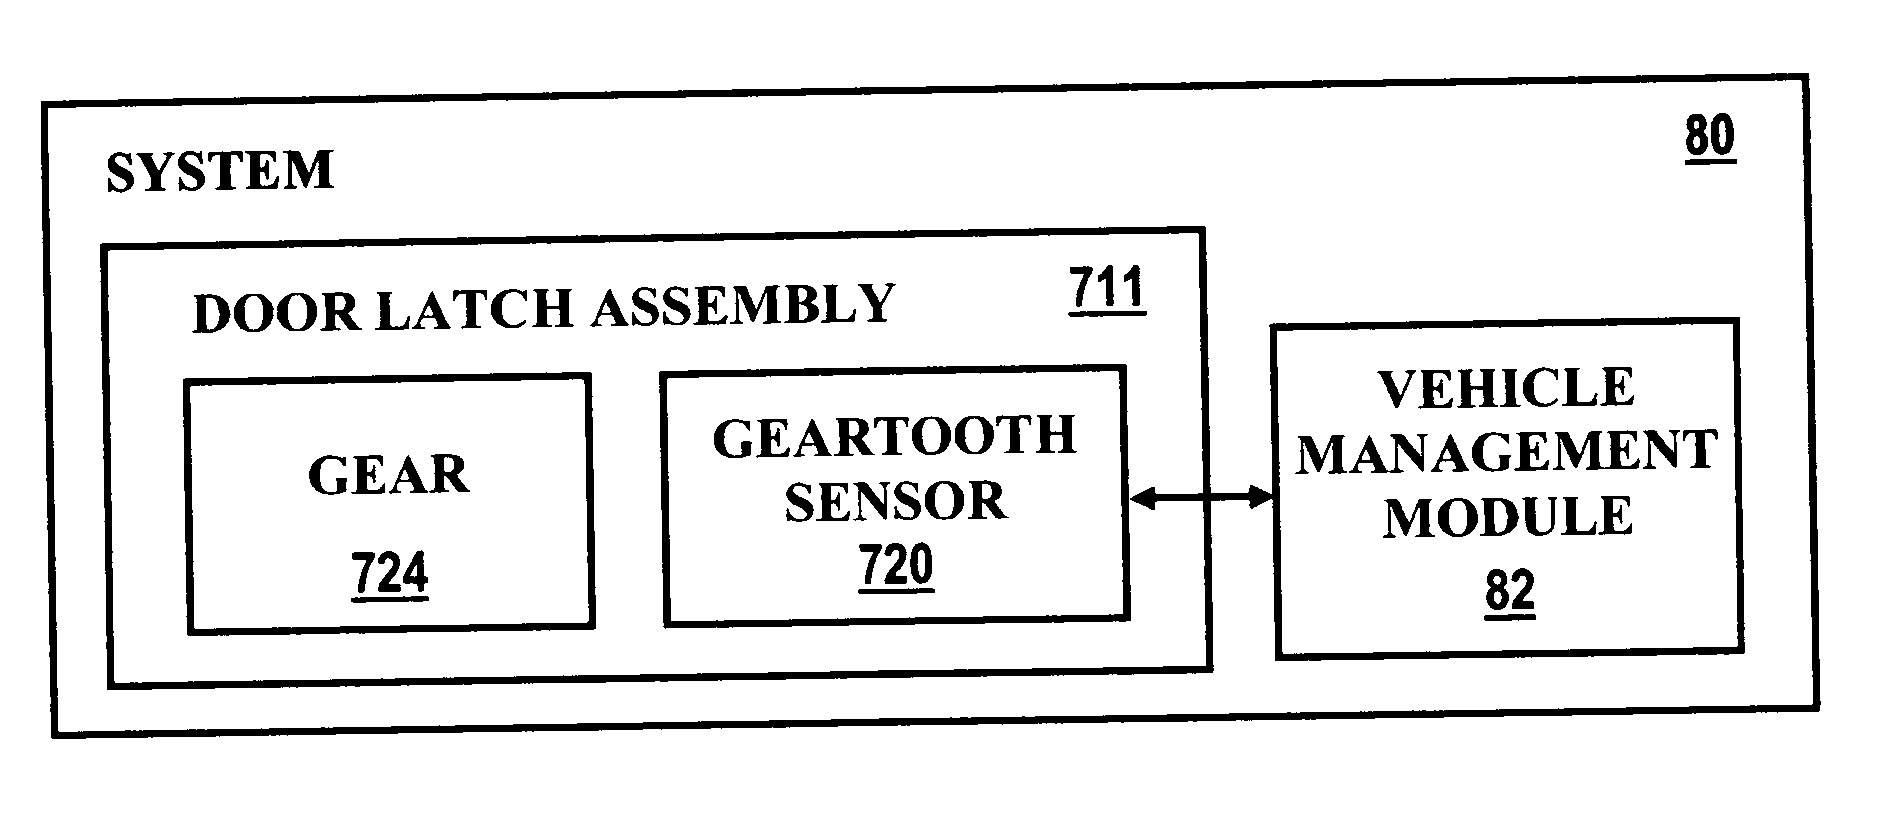 Latch control by gear position sensing